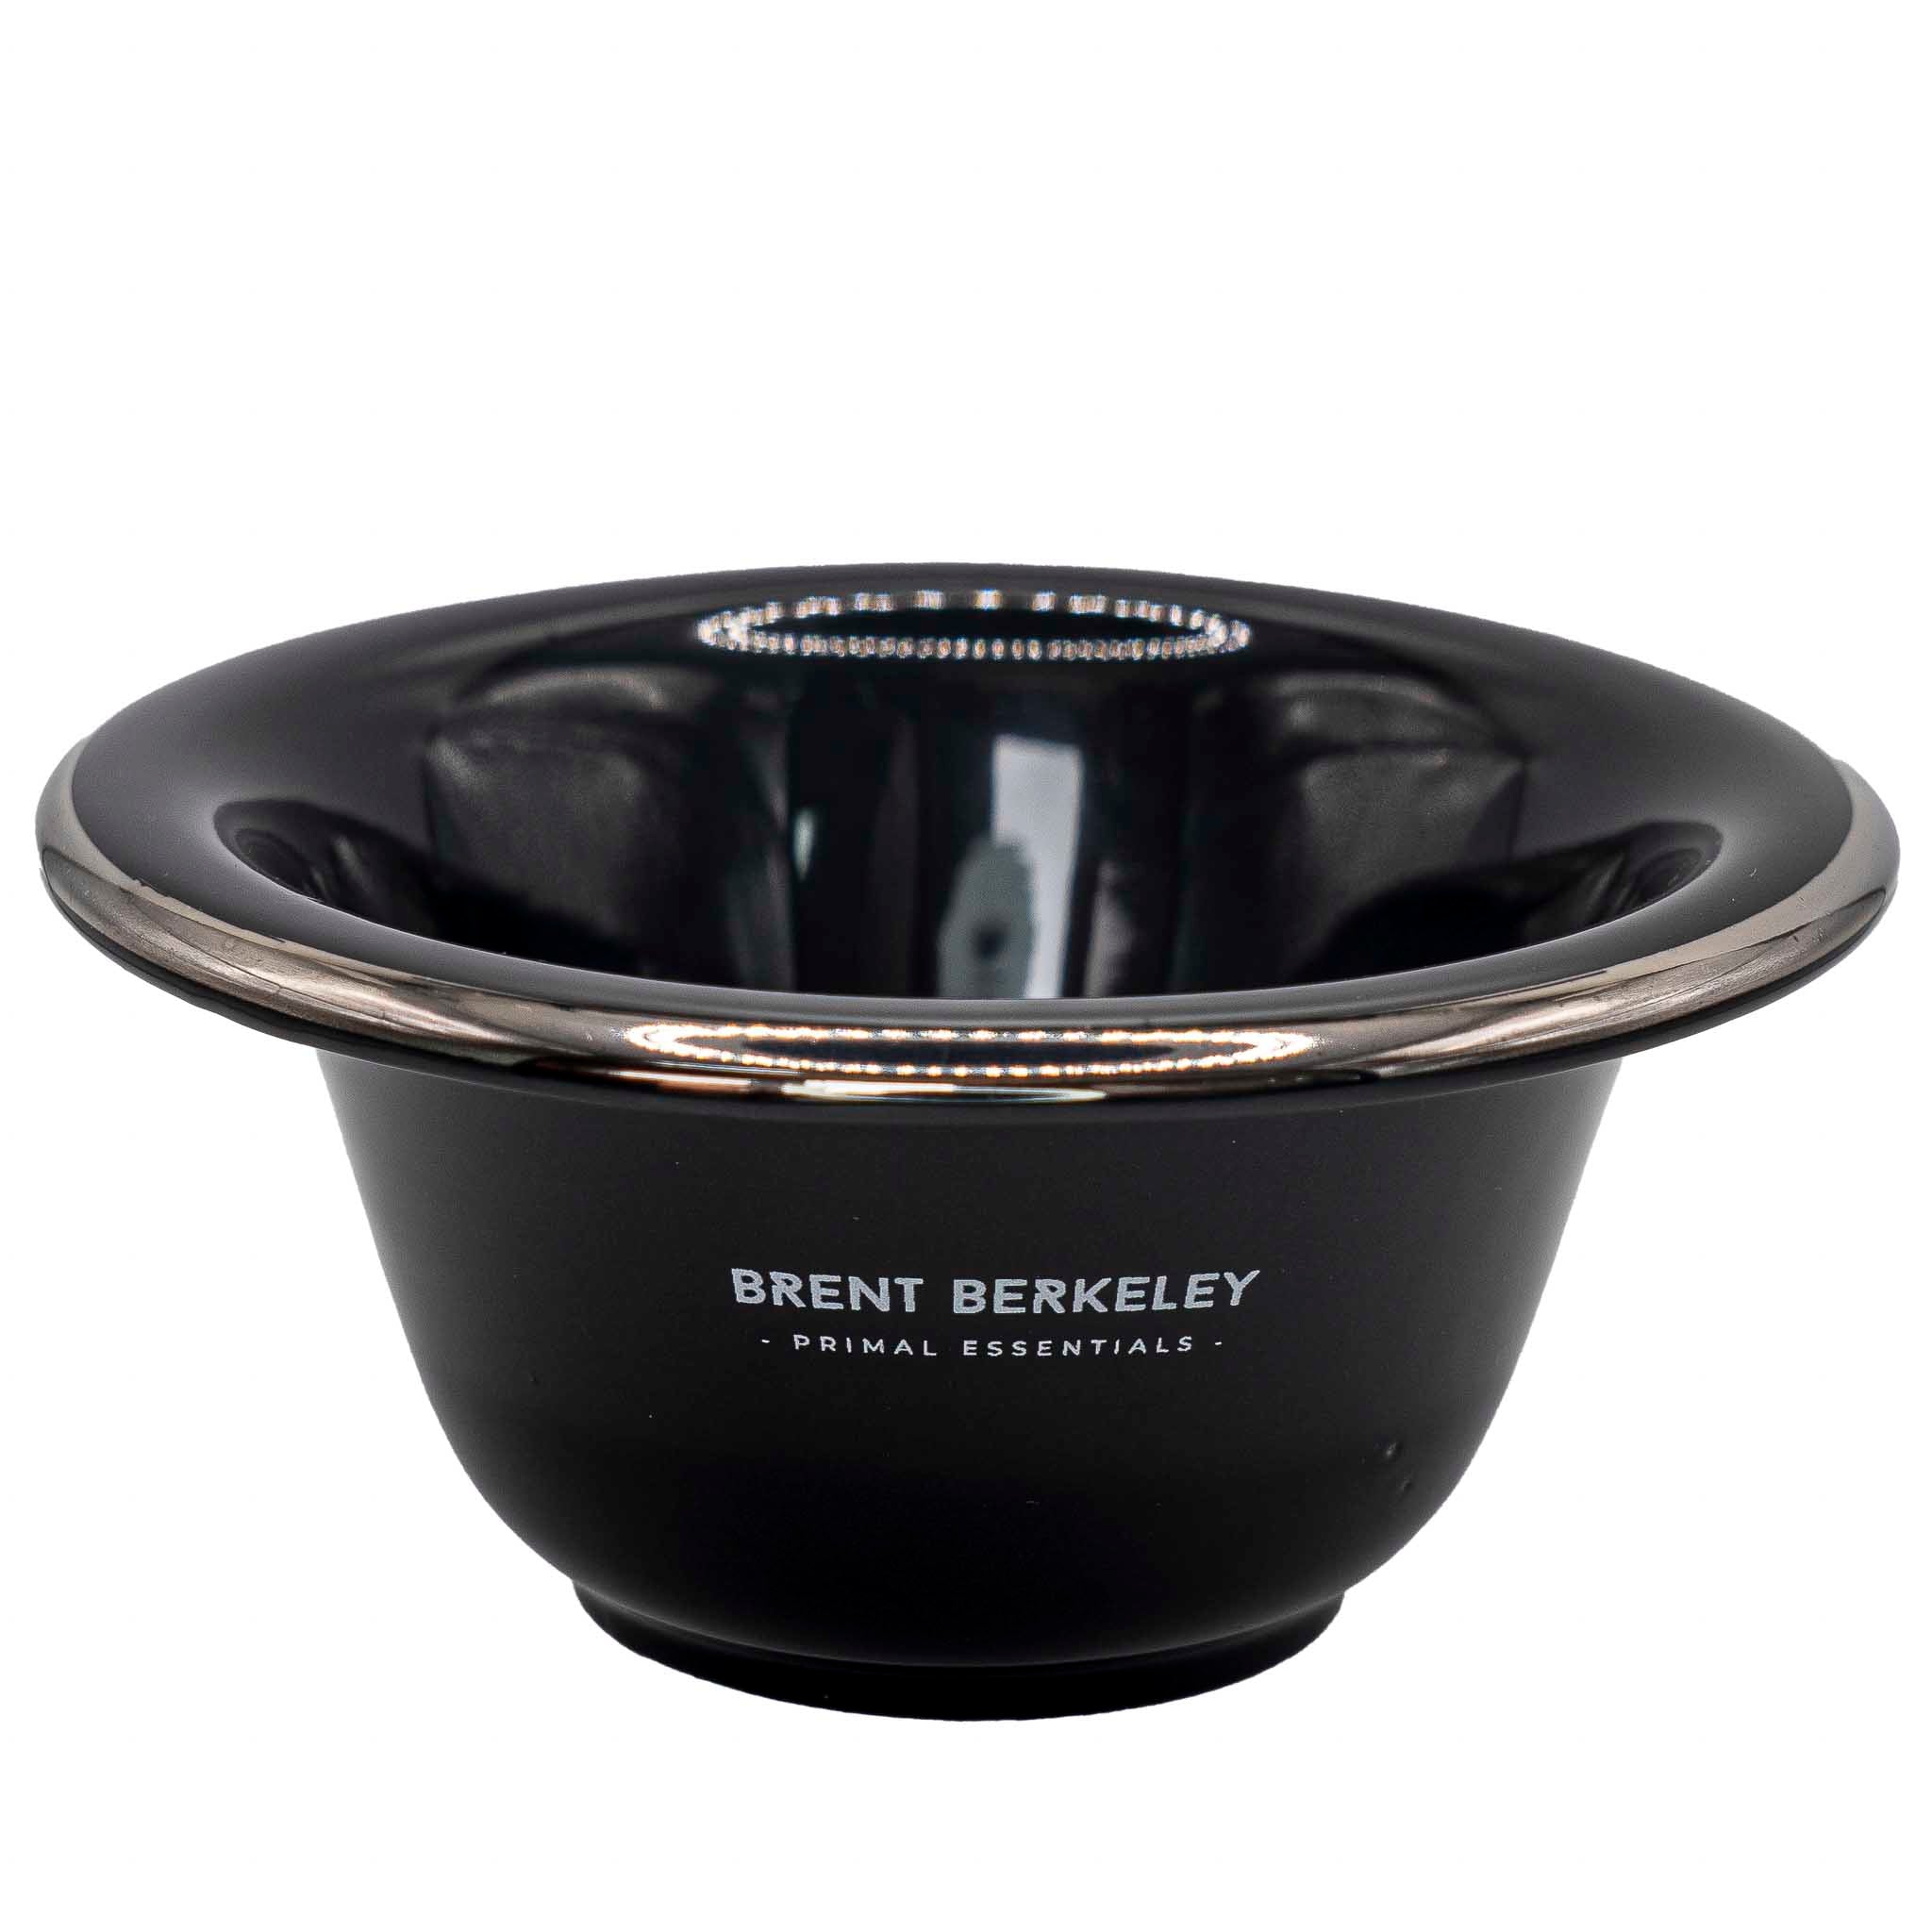 Brent Berkeley Porcelain Shaving Mug and soap tray